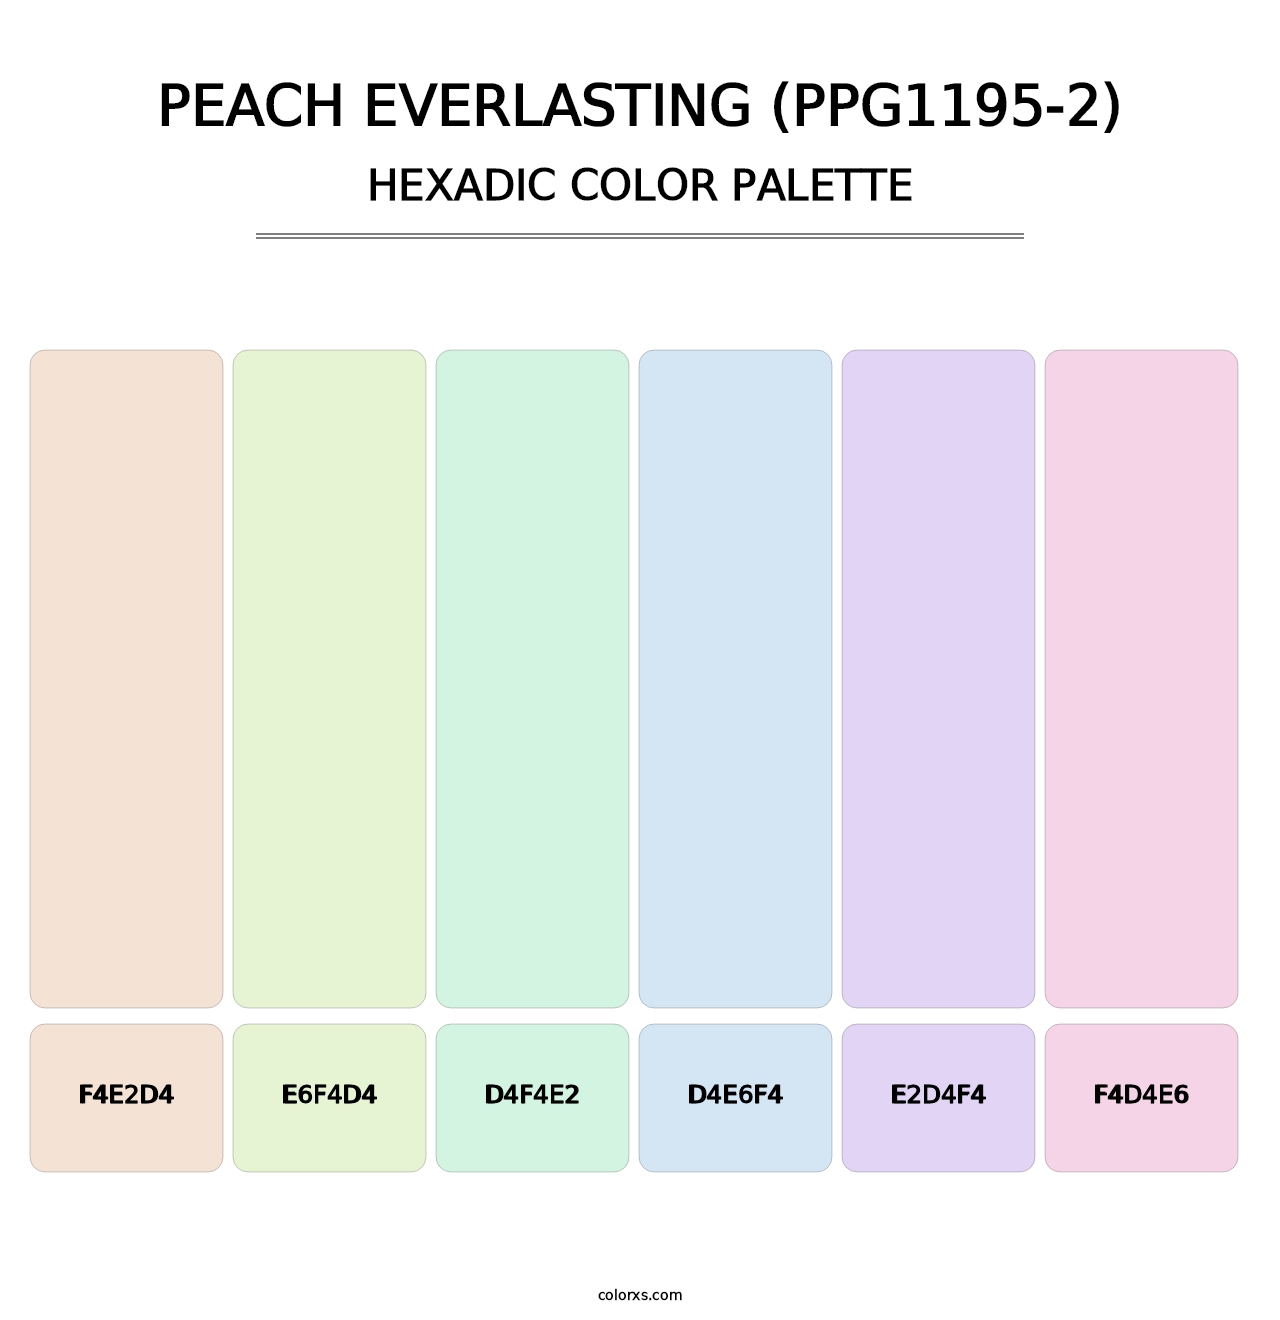 Peach Everlasting (PPG1195-2) - Hexadic Color Palette